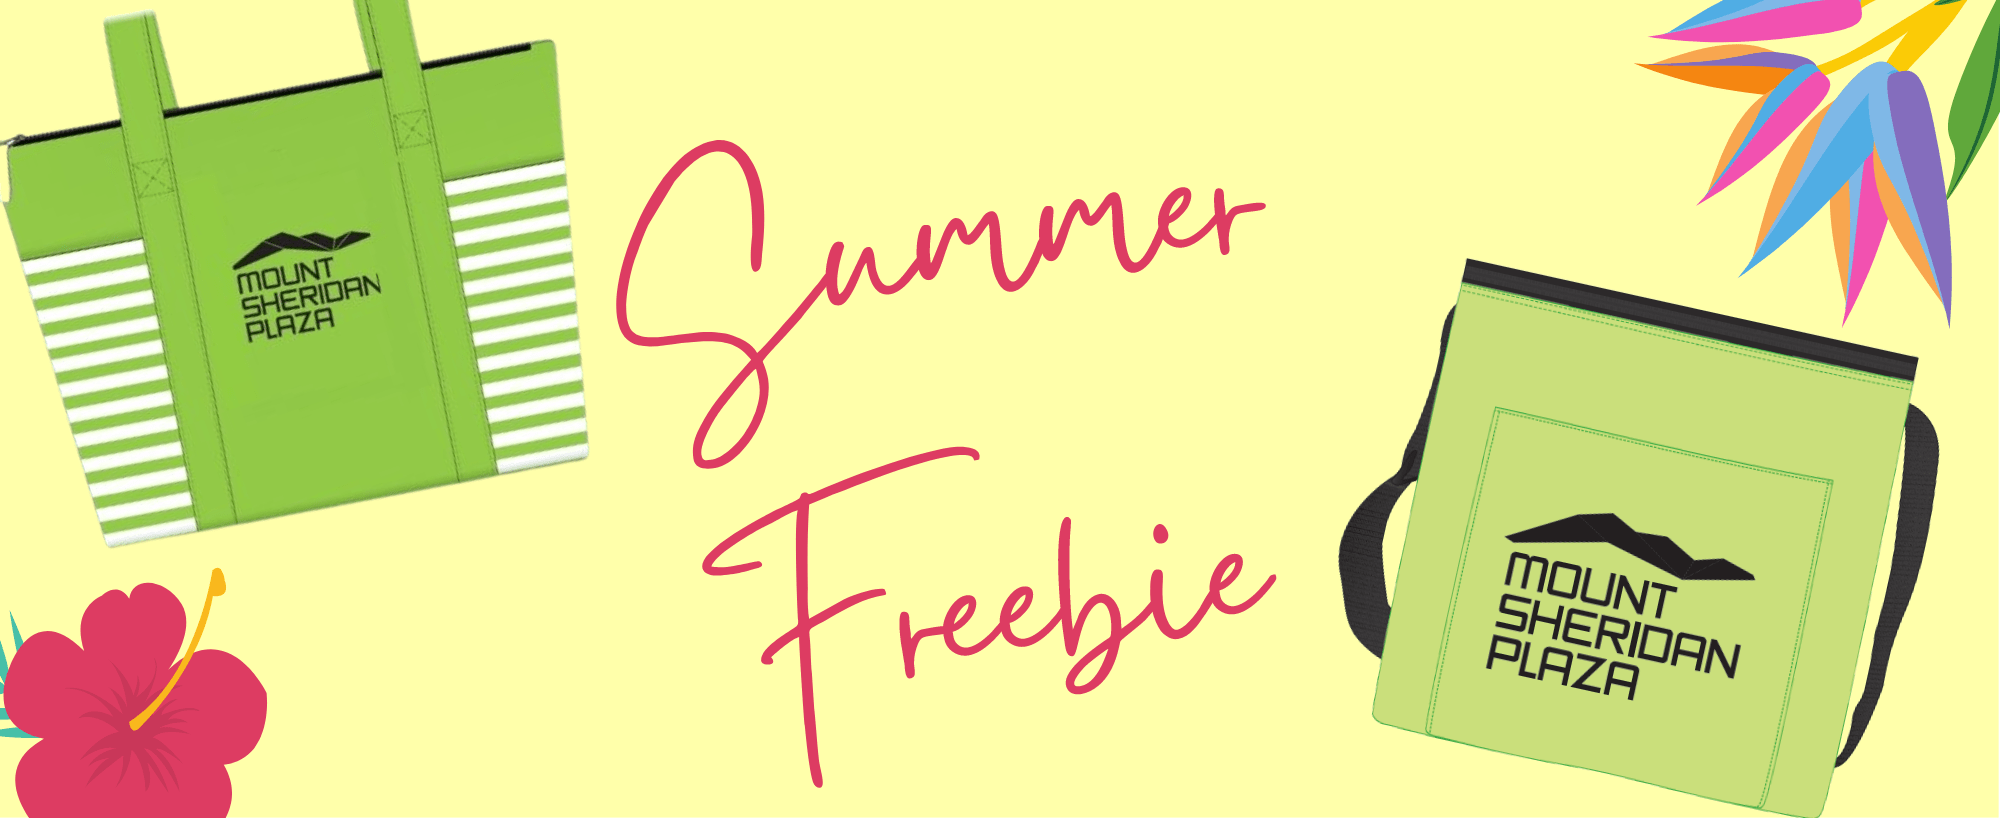 Summer freebie Celebrating Australia day in fnq!